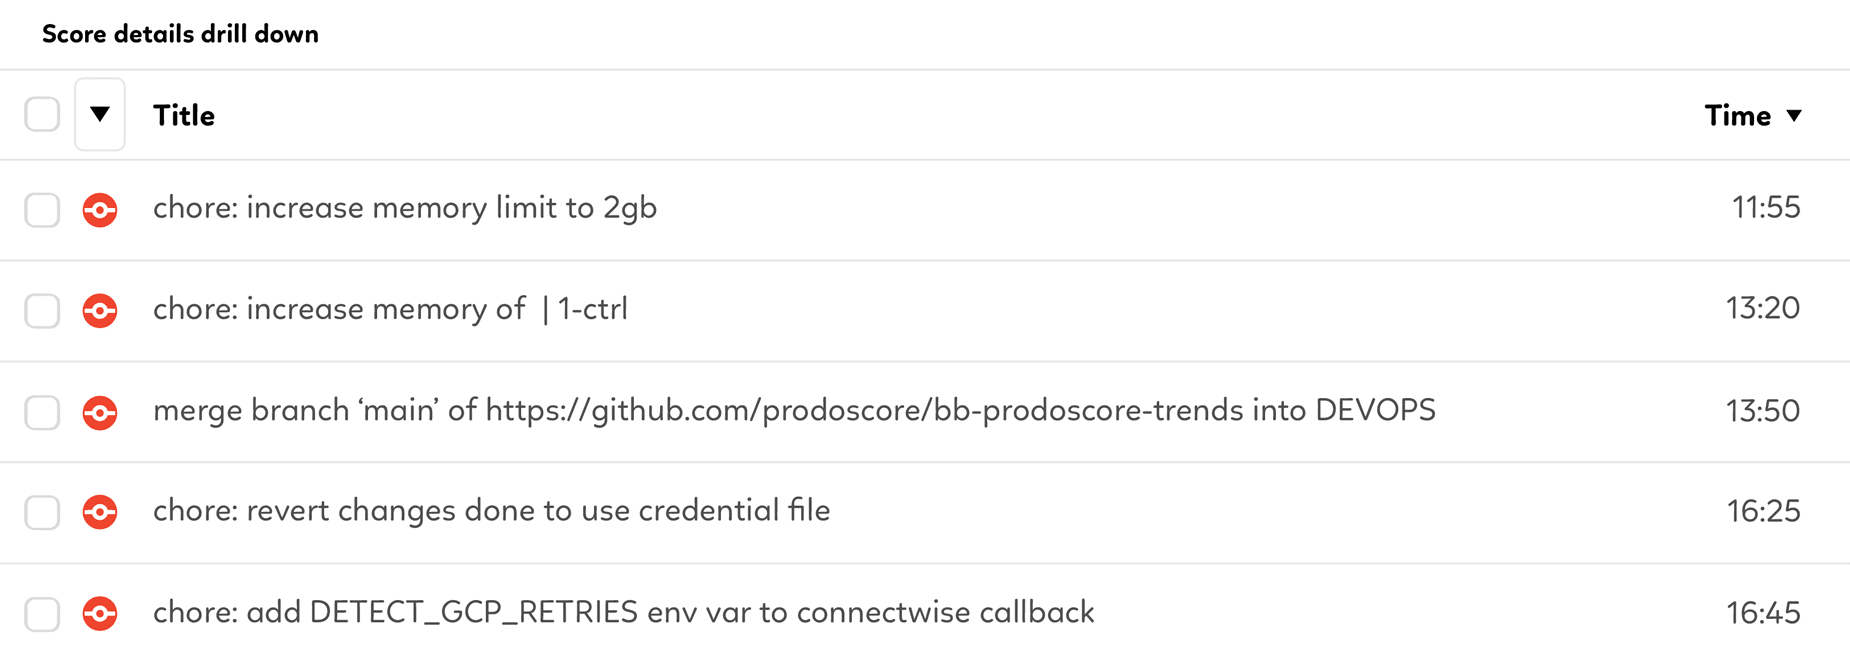 GitHub - Score details drill down